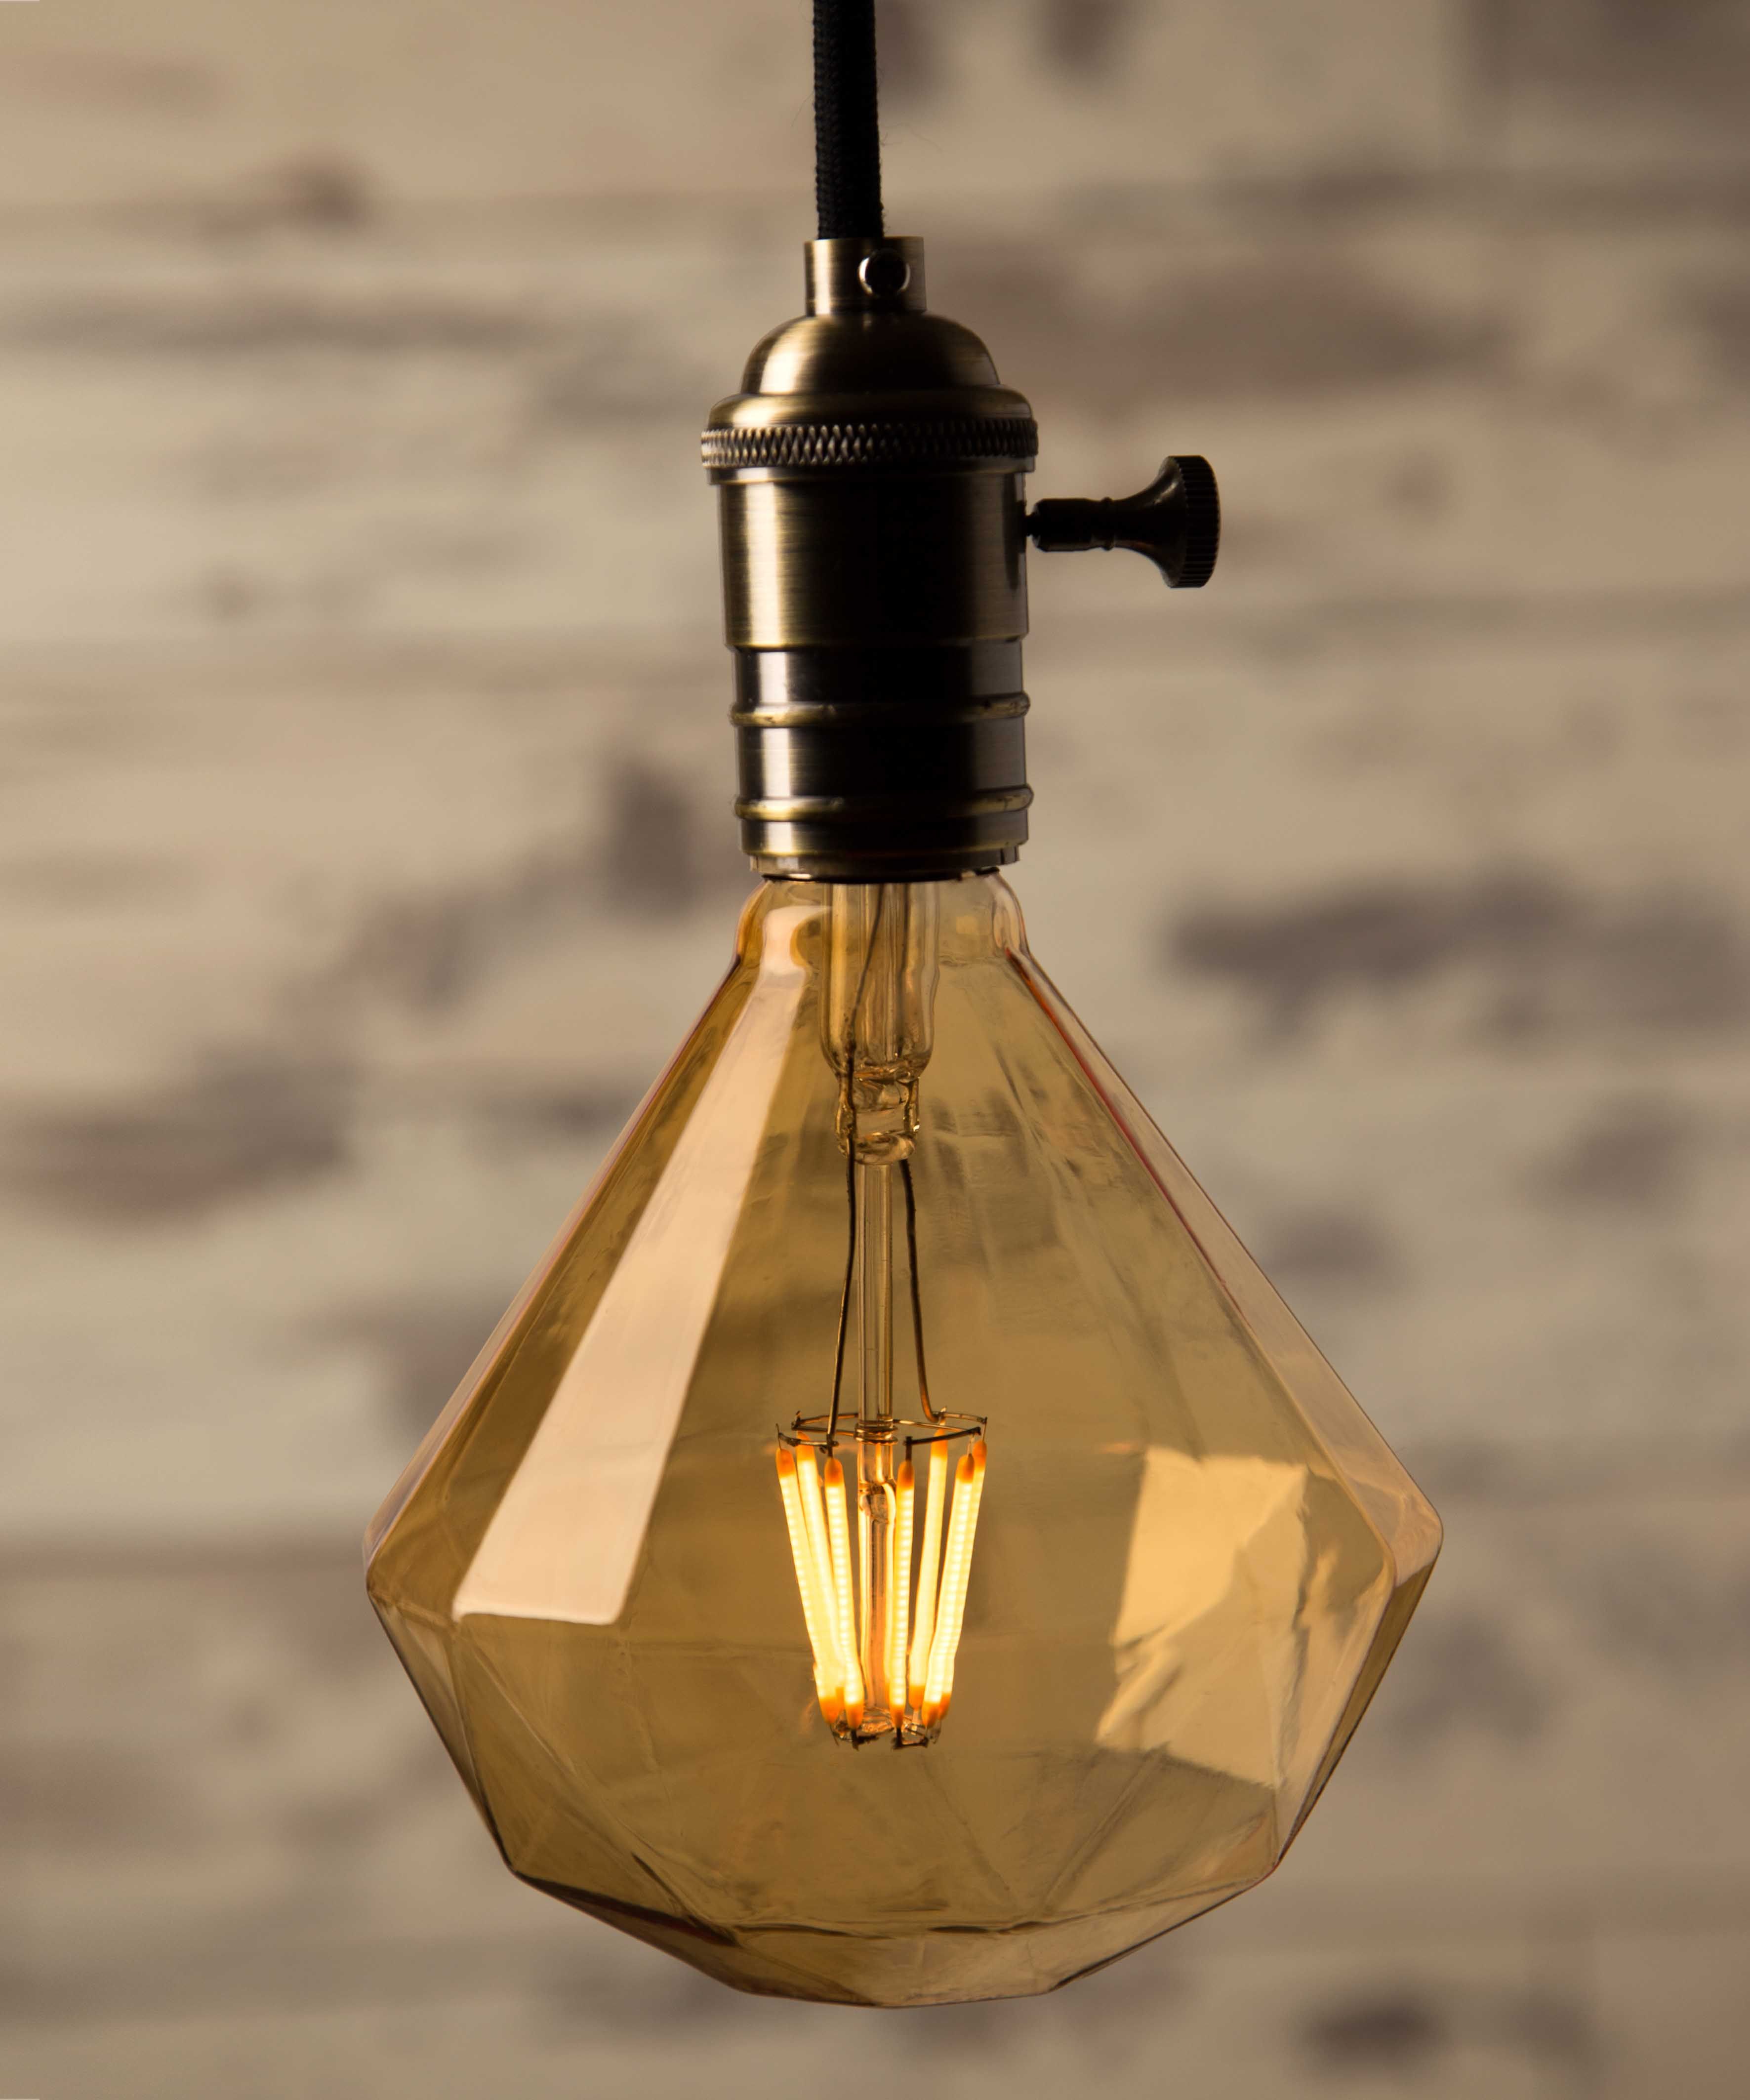 New Diamond led bulb - חיפוש ב-Google | Product design | Pinterest ...